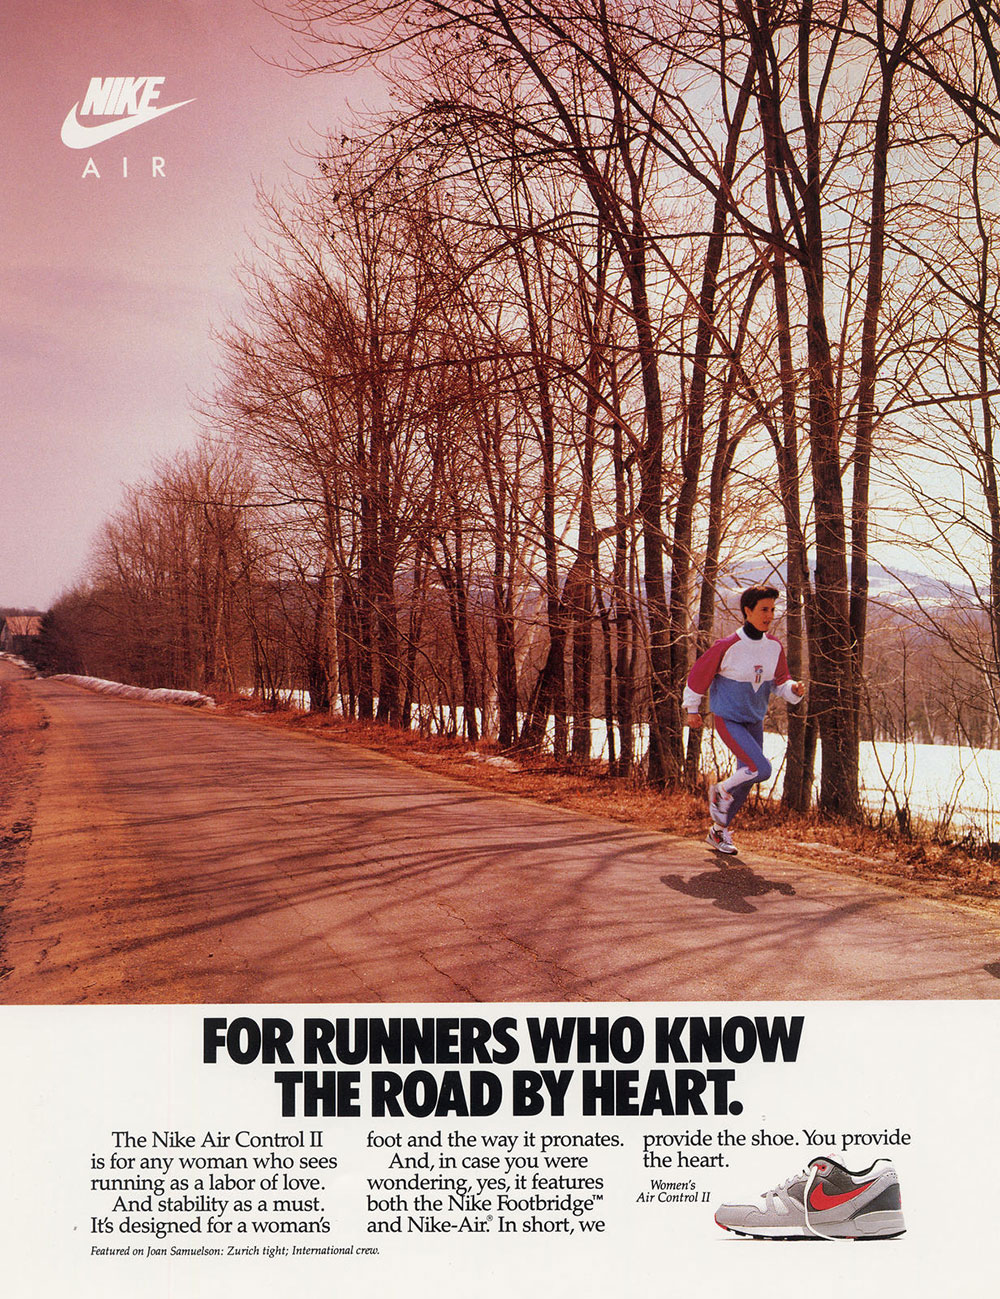 Reembolso Letrista adherirse Nike Print Magazine Ads: The BEST 46 Nike Advertisements